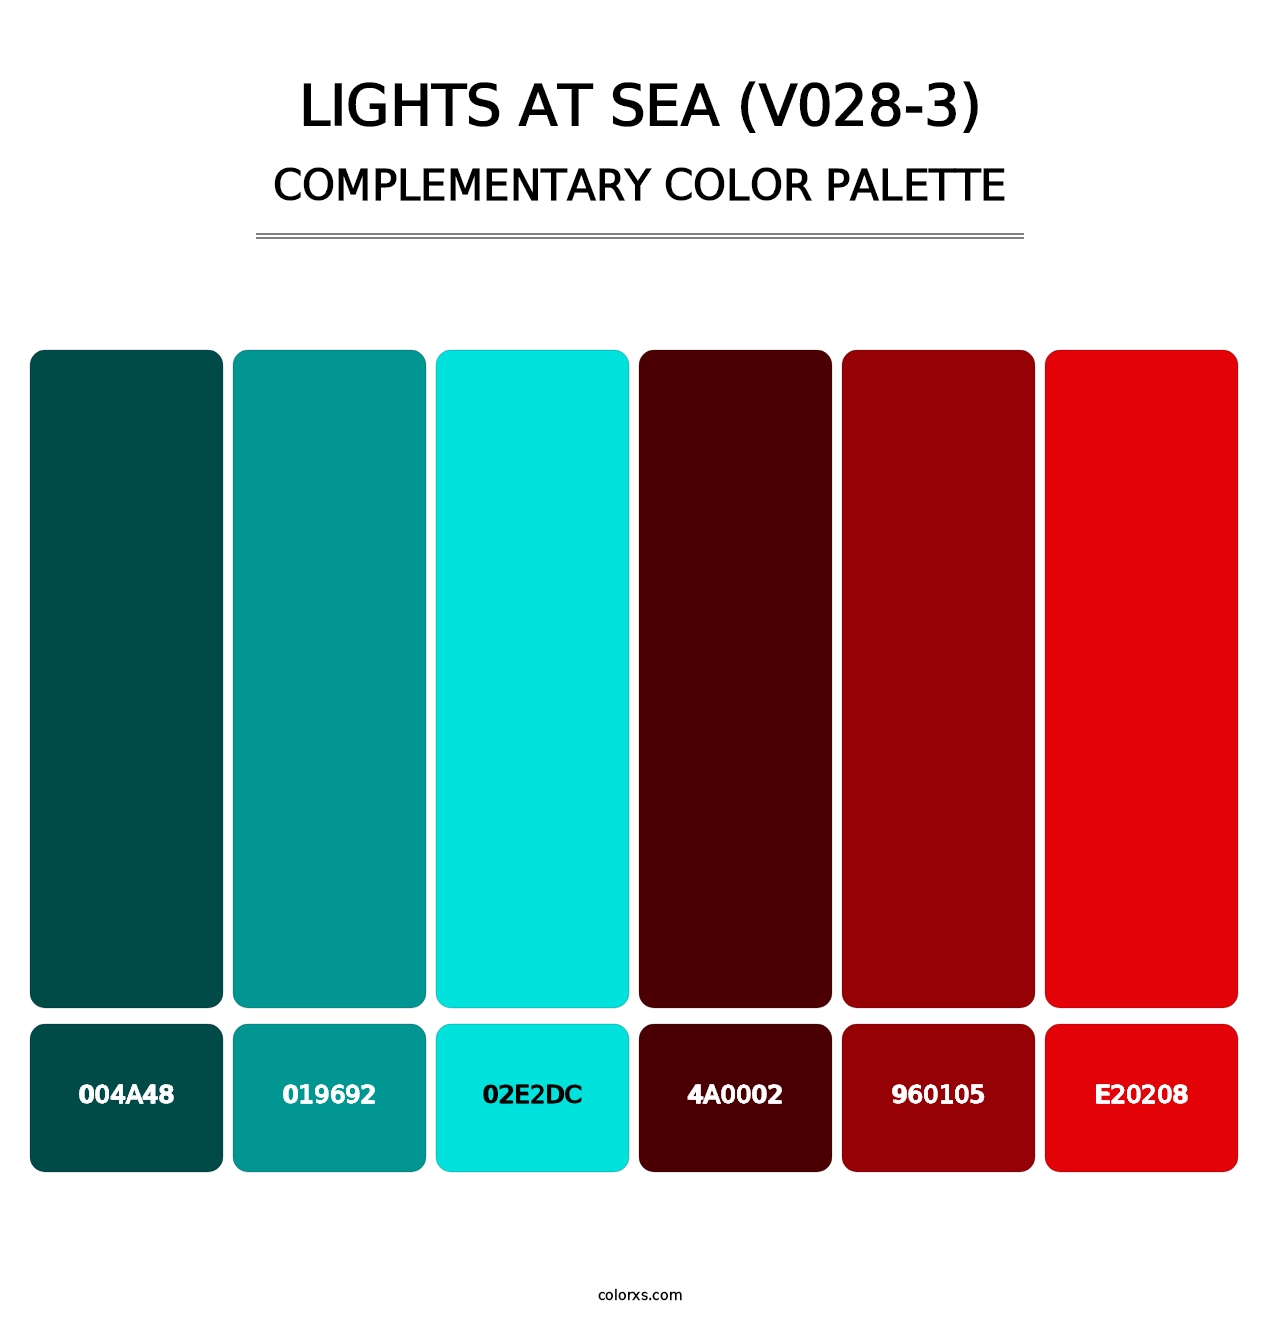 Lights at Sea (V028-3) - Complementary Color Palette